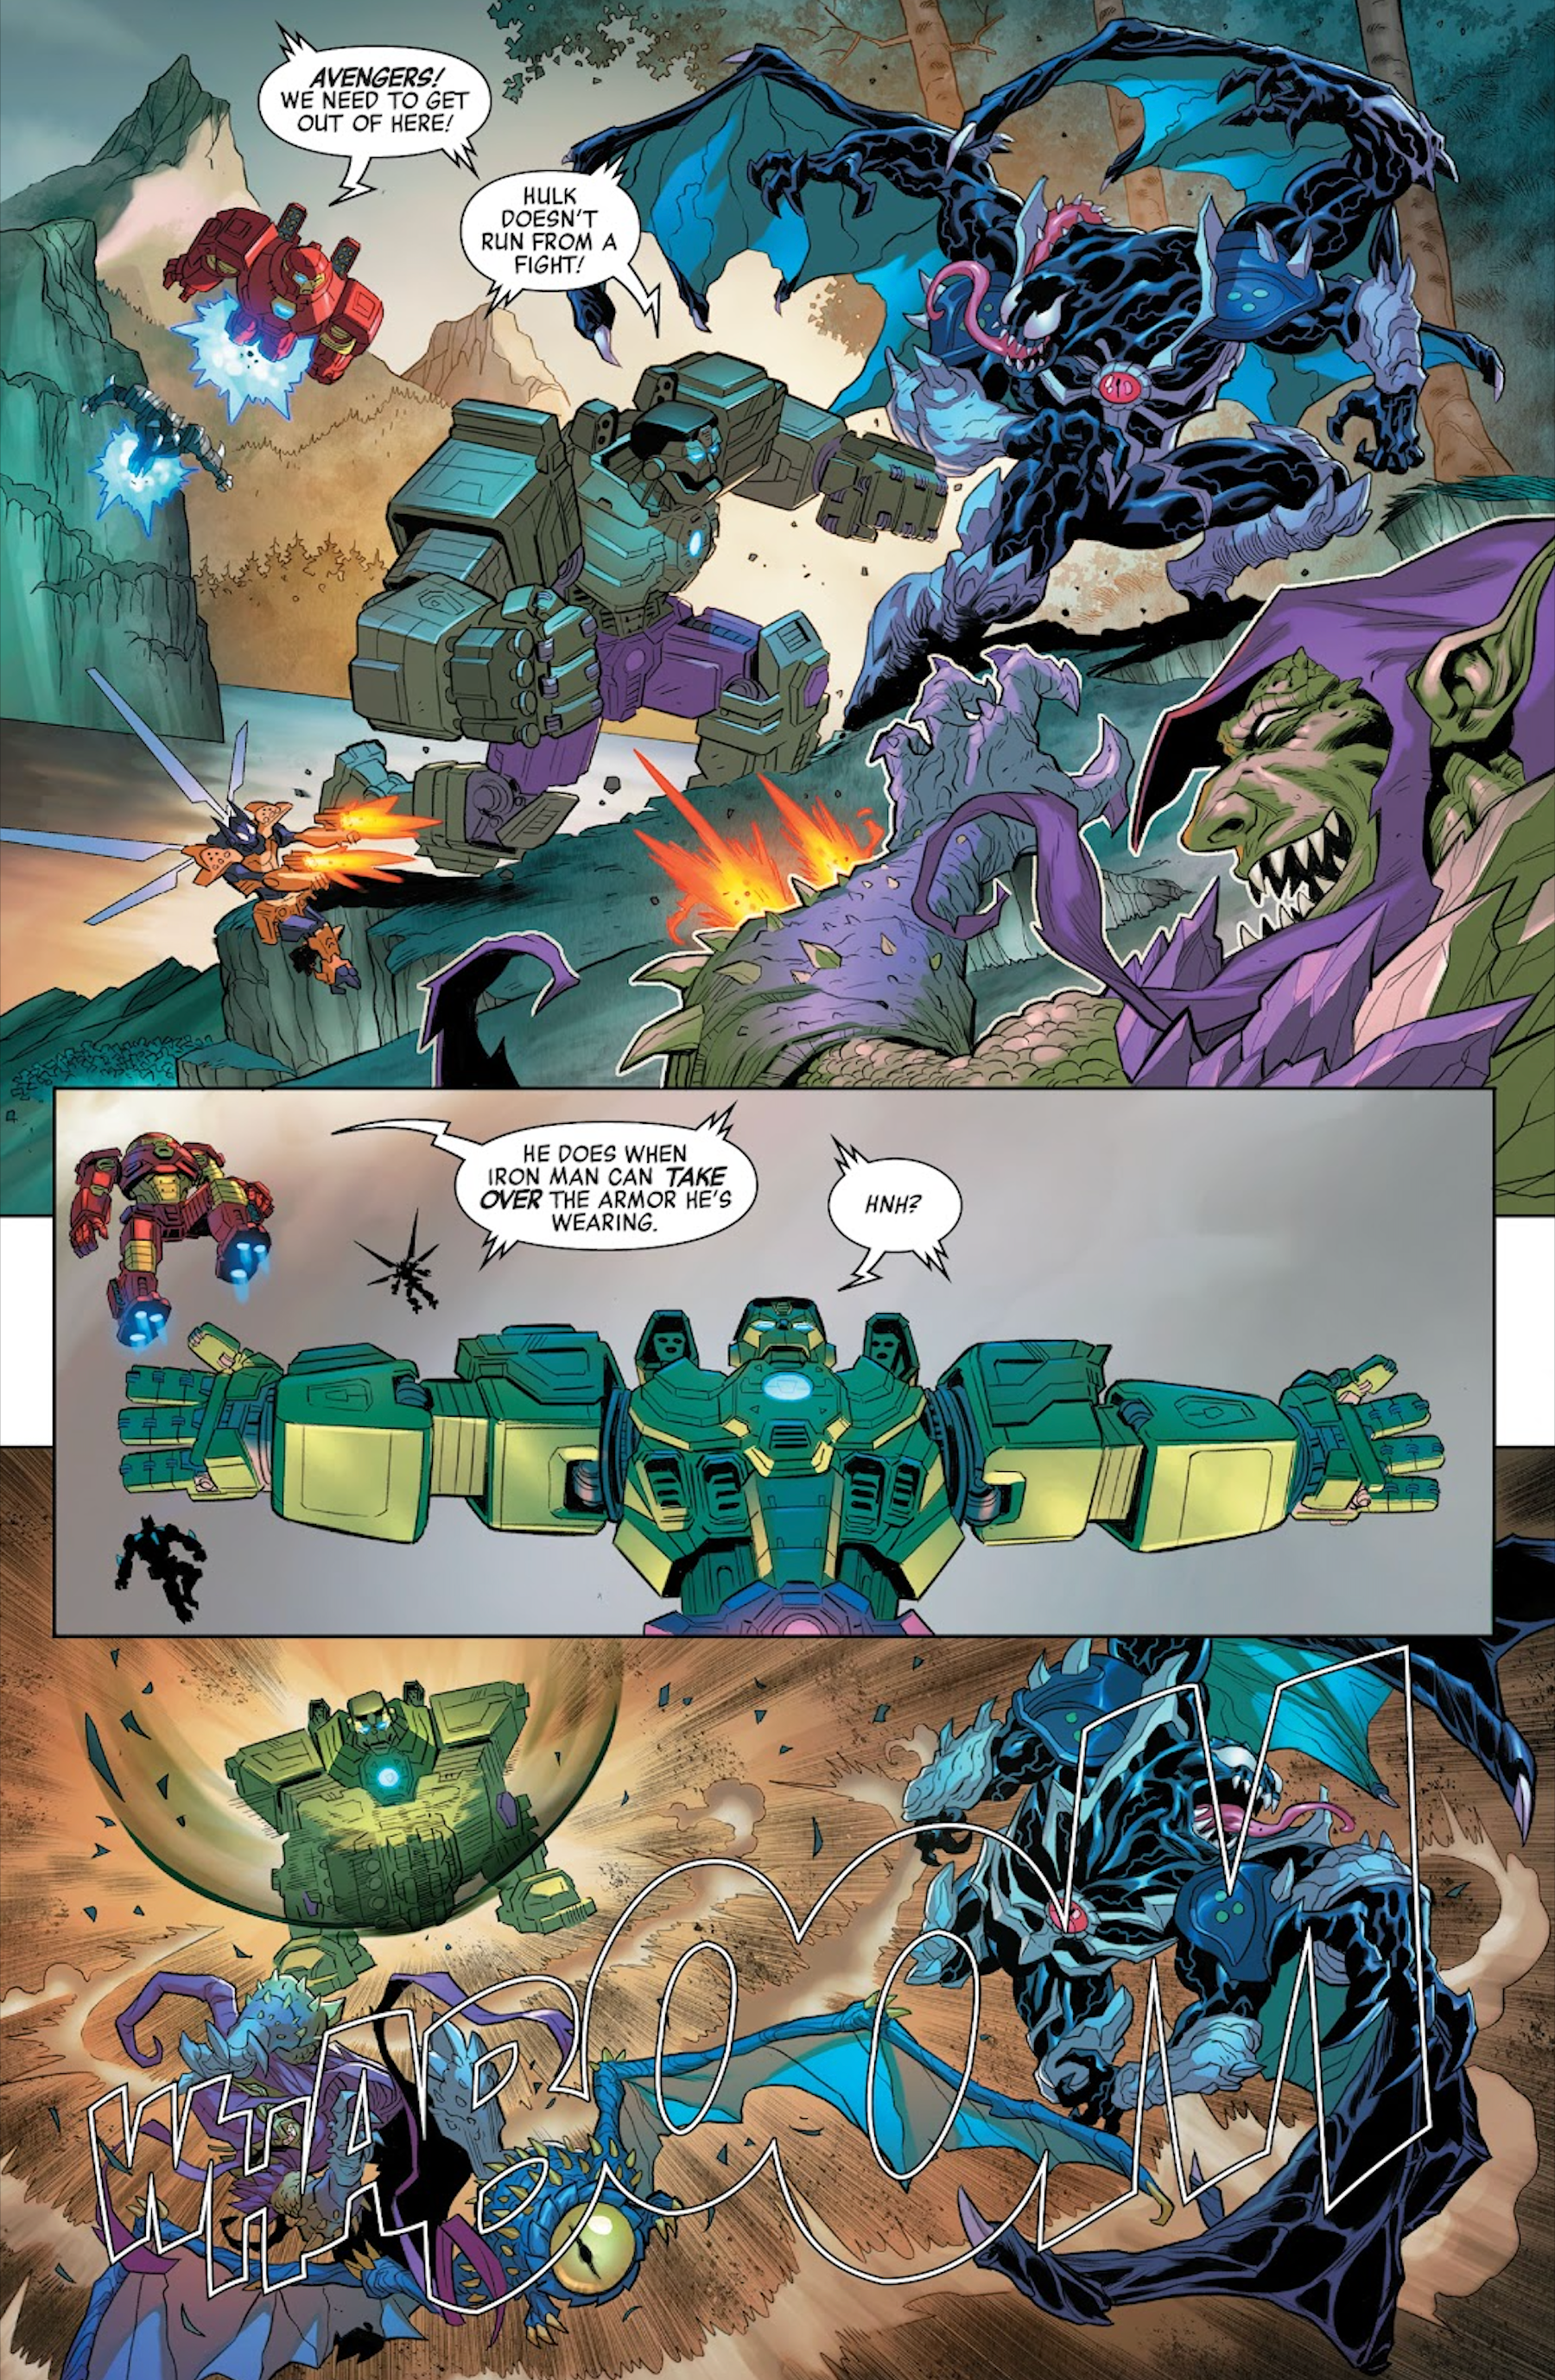 Iron Man controls Hulks armor